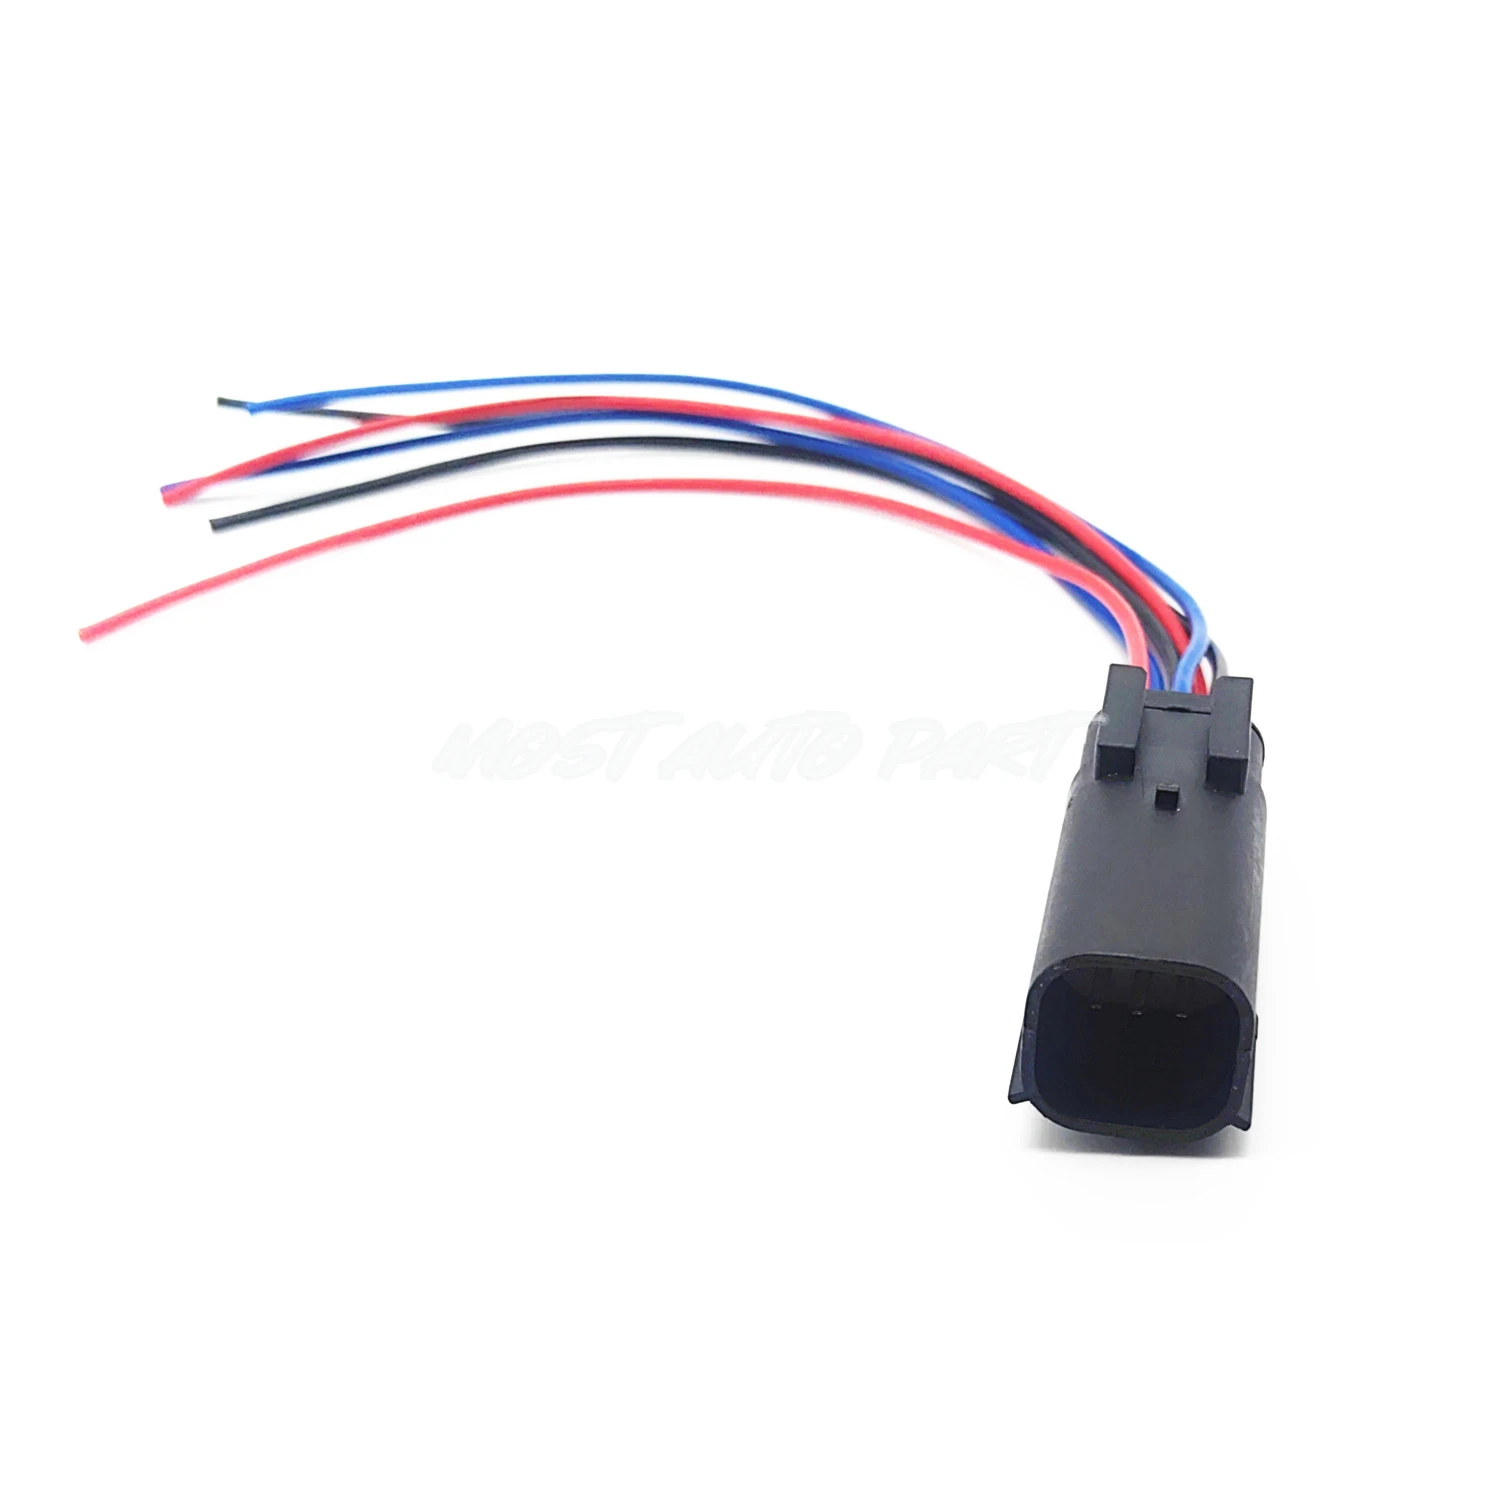 

NGK 22537 Oxygen Sensor Connector Plug Pigtail For F-550 Super Duty 2013-2016 Male Connector Plug Harness